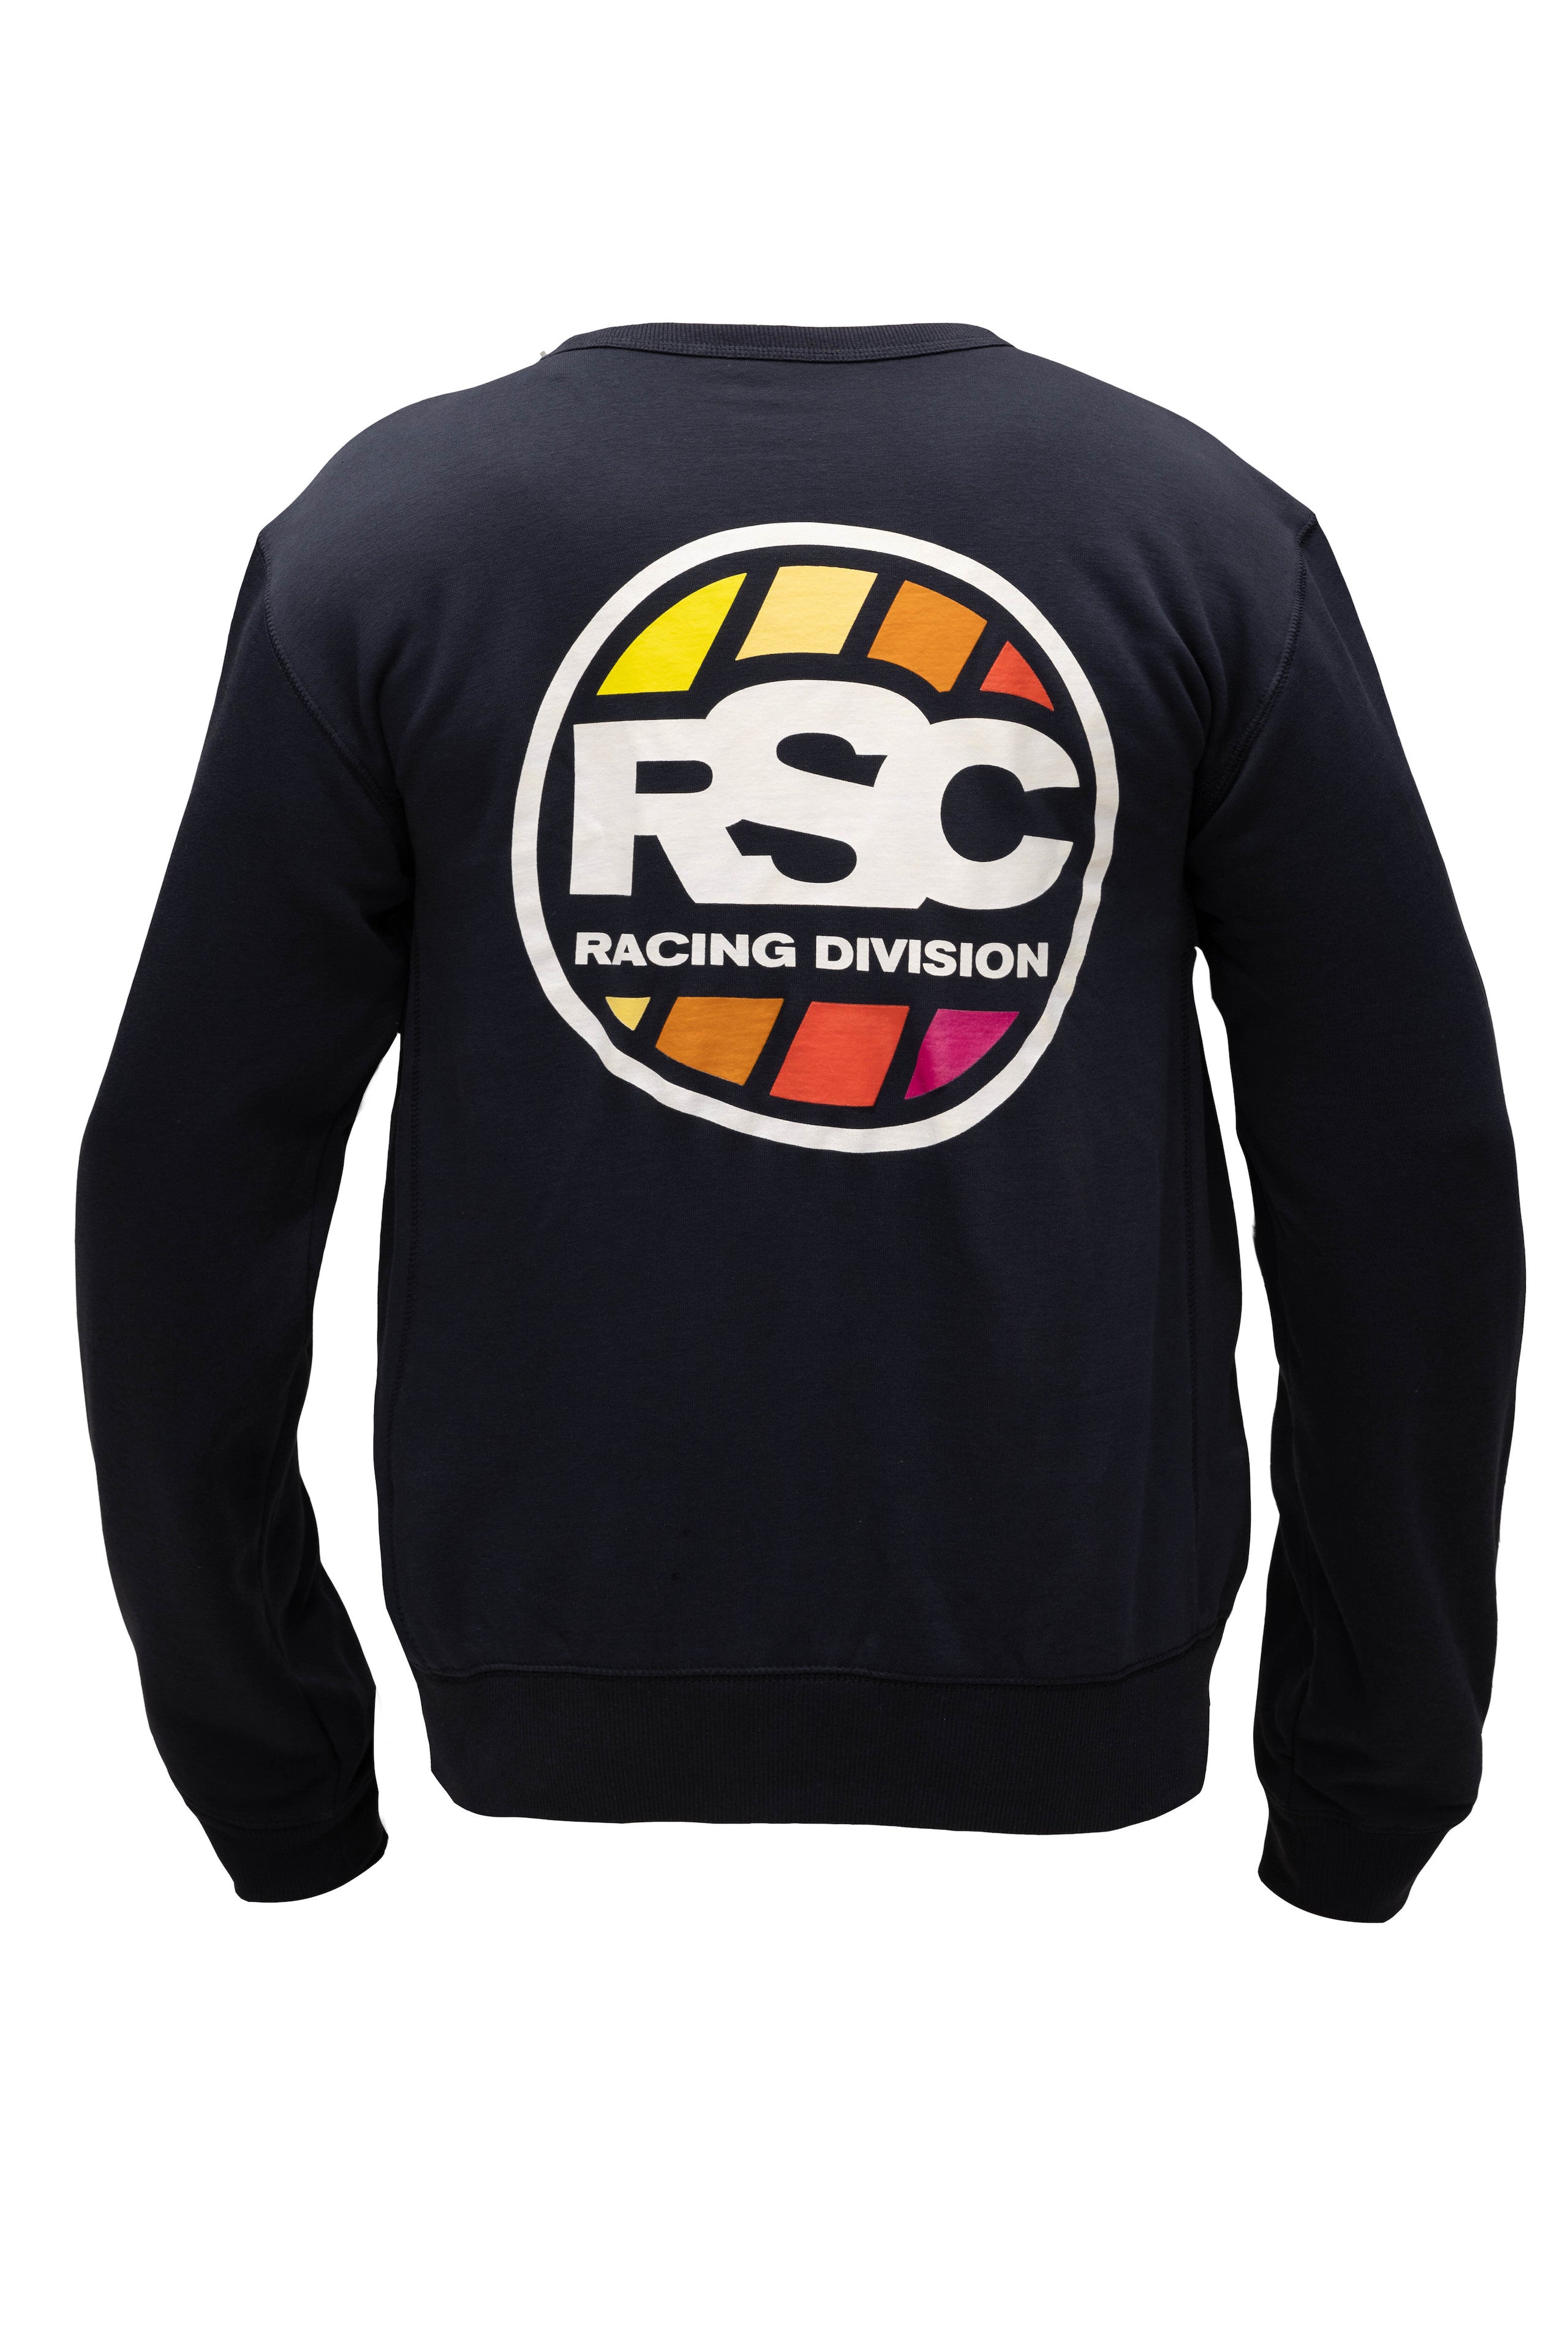 RSC Racing Division Longsleeve Sweatshirt